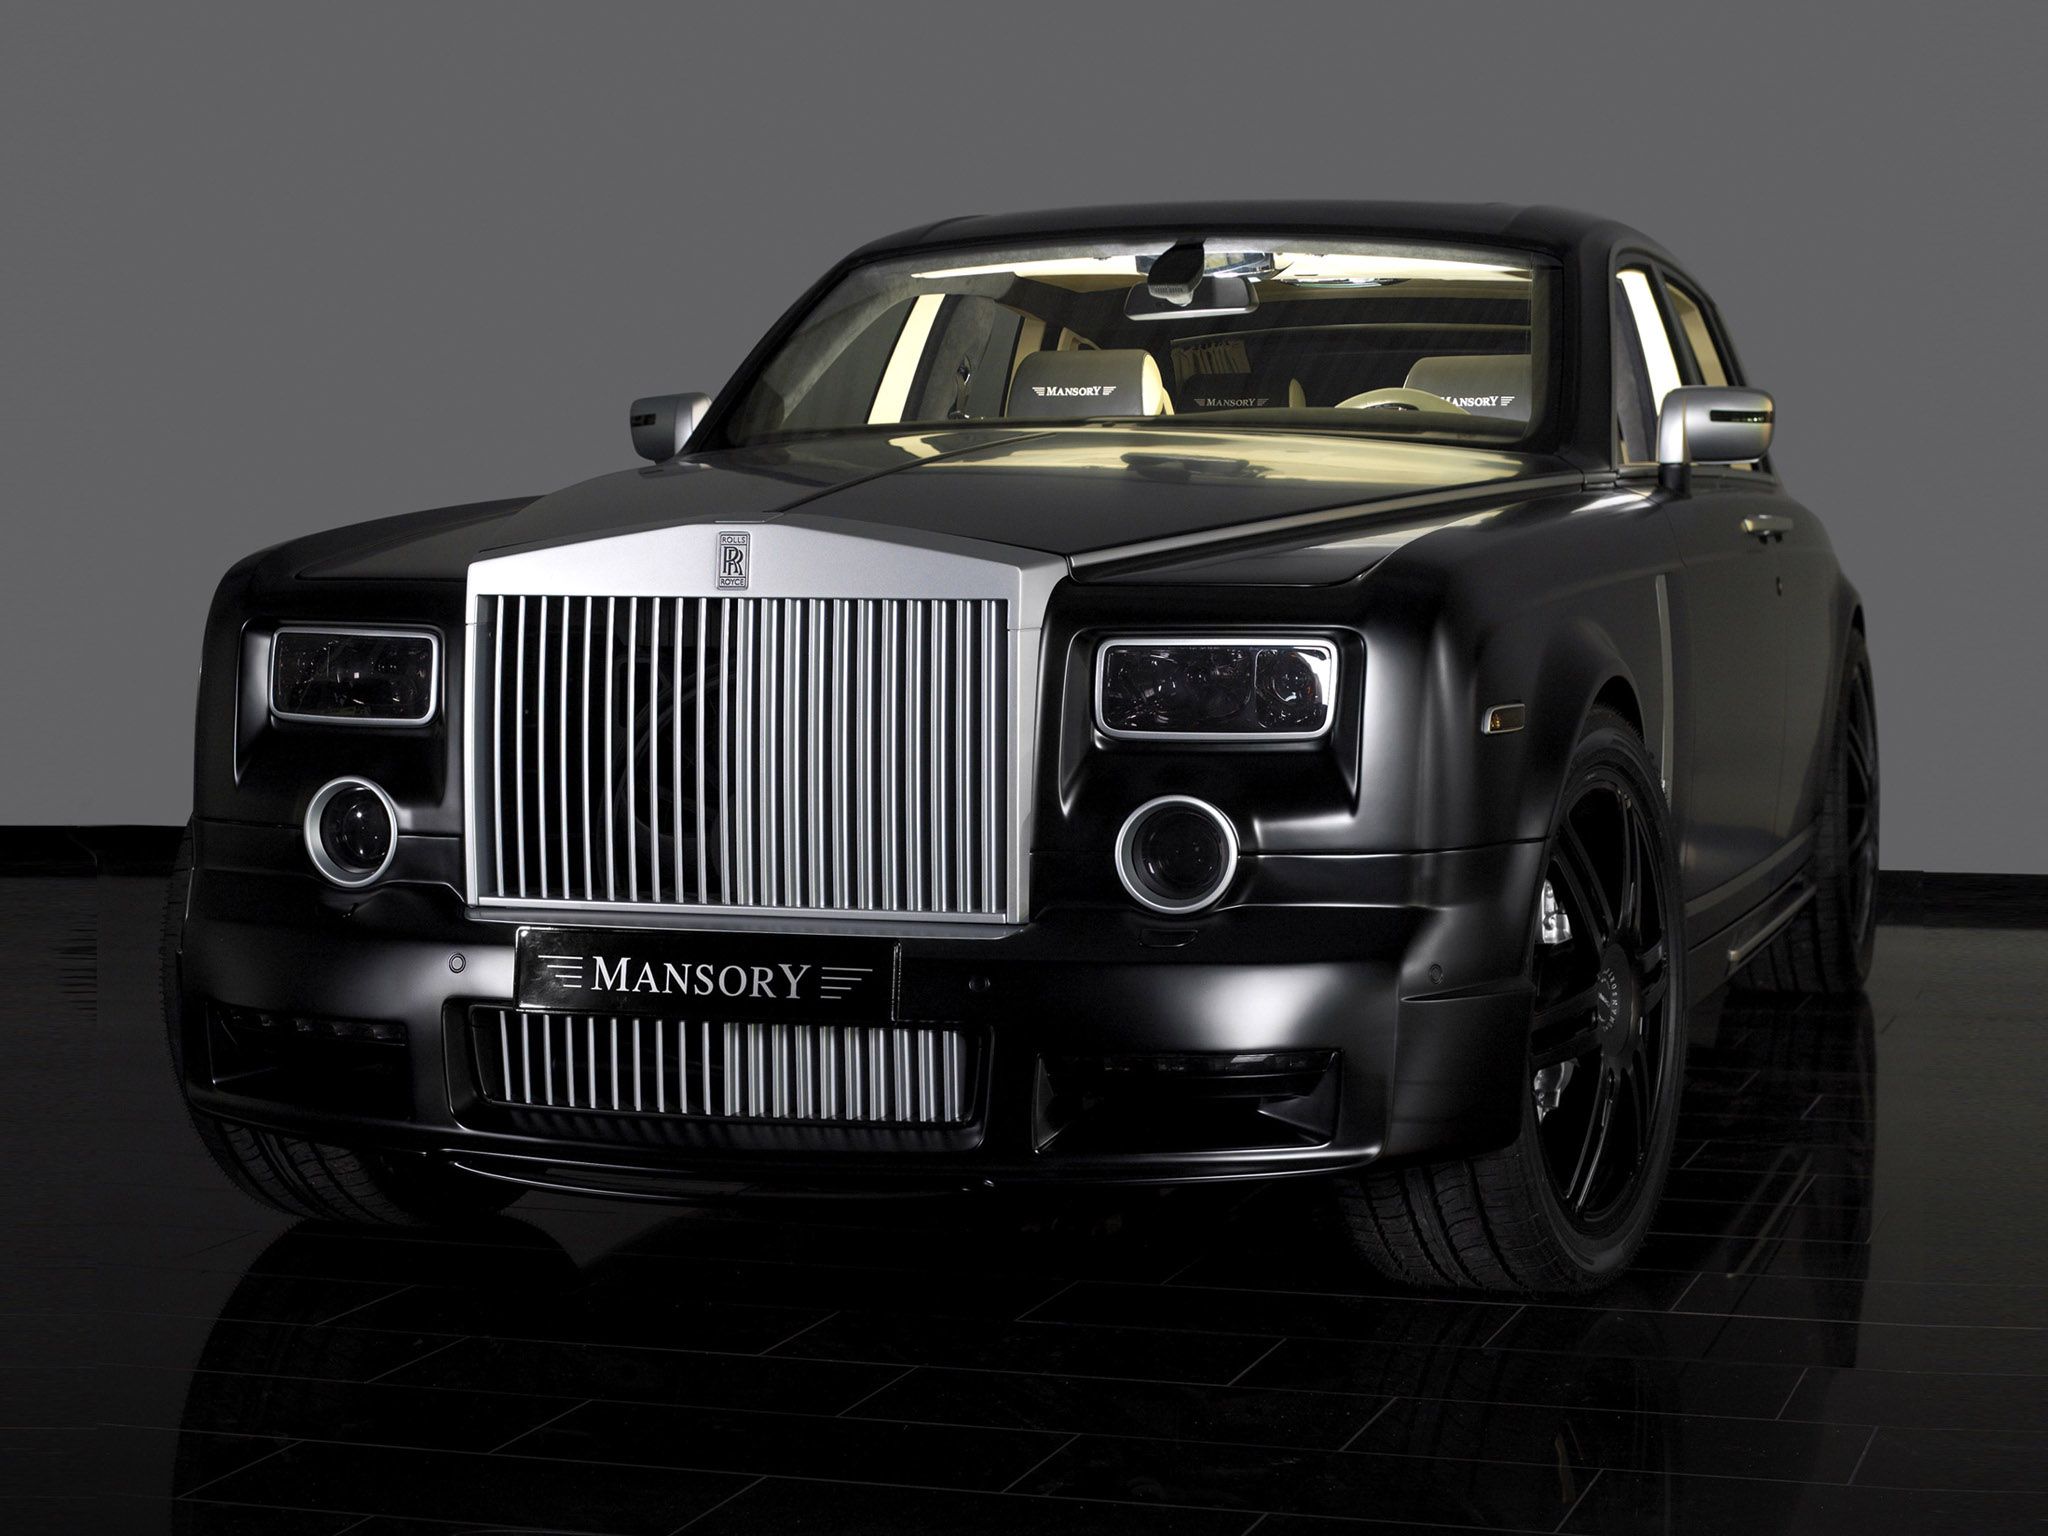 Wallpapers Rolls Royce Phantom Cars Image Download